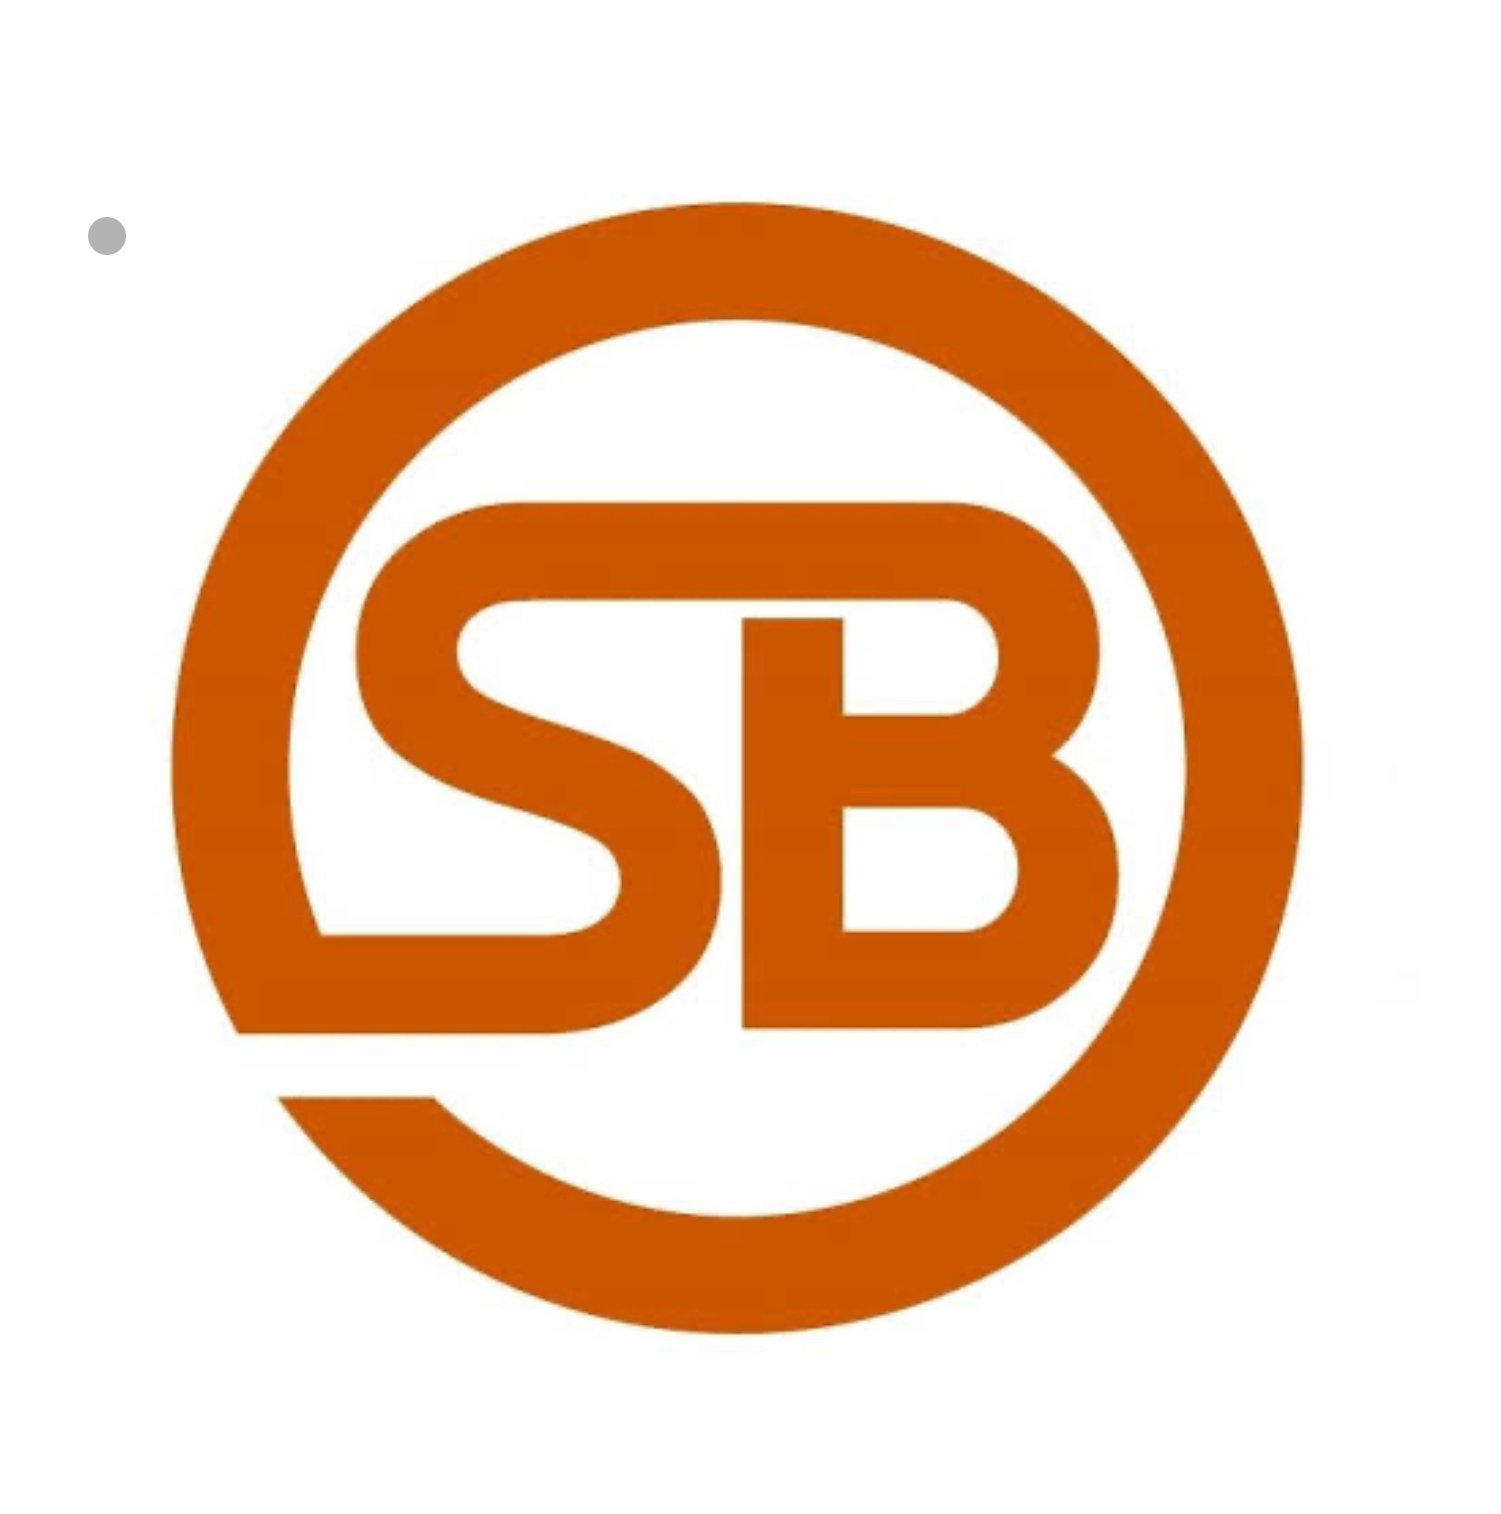 Soundbunker logo click to learn more